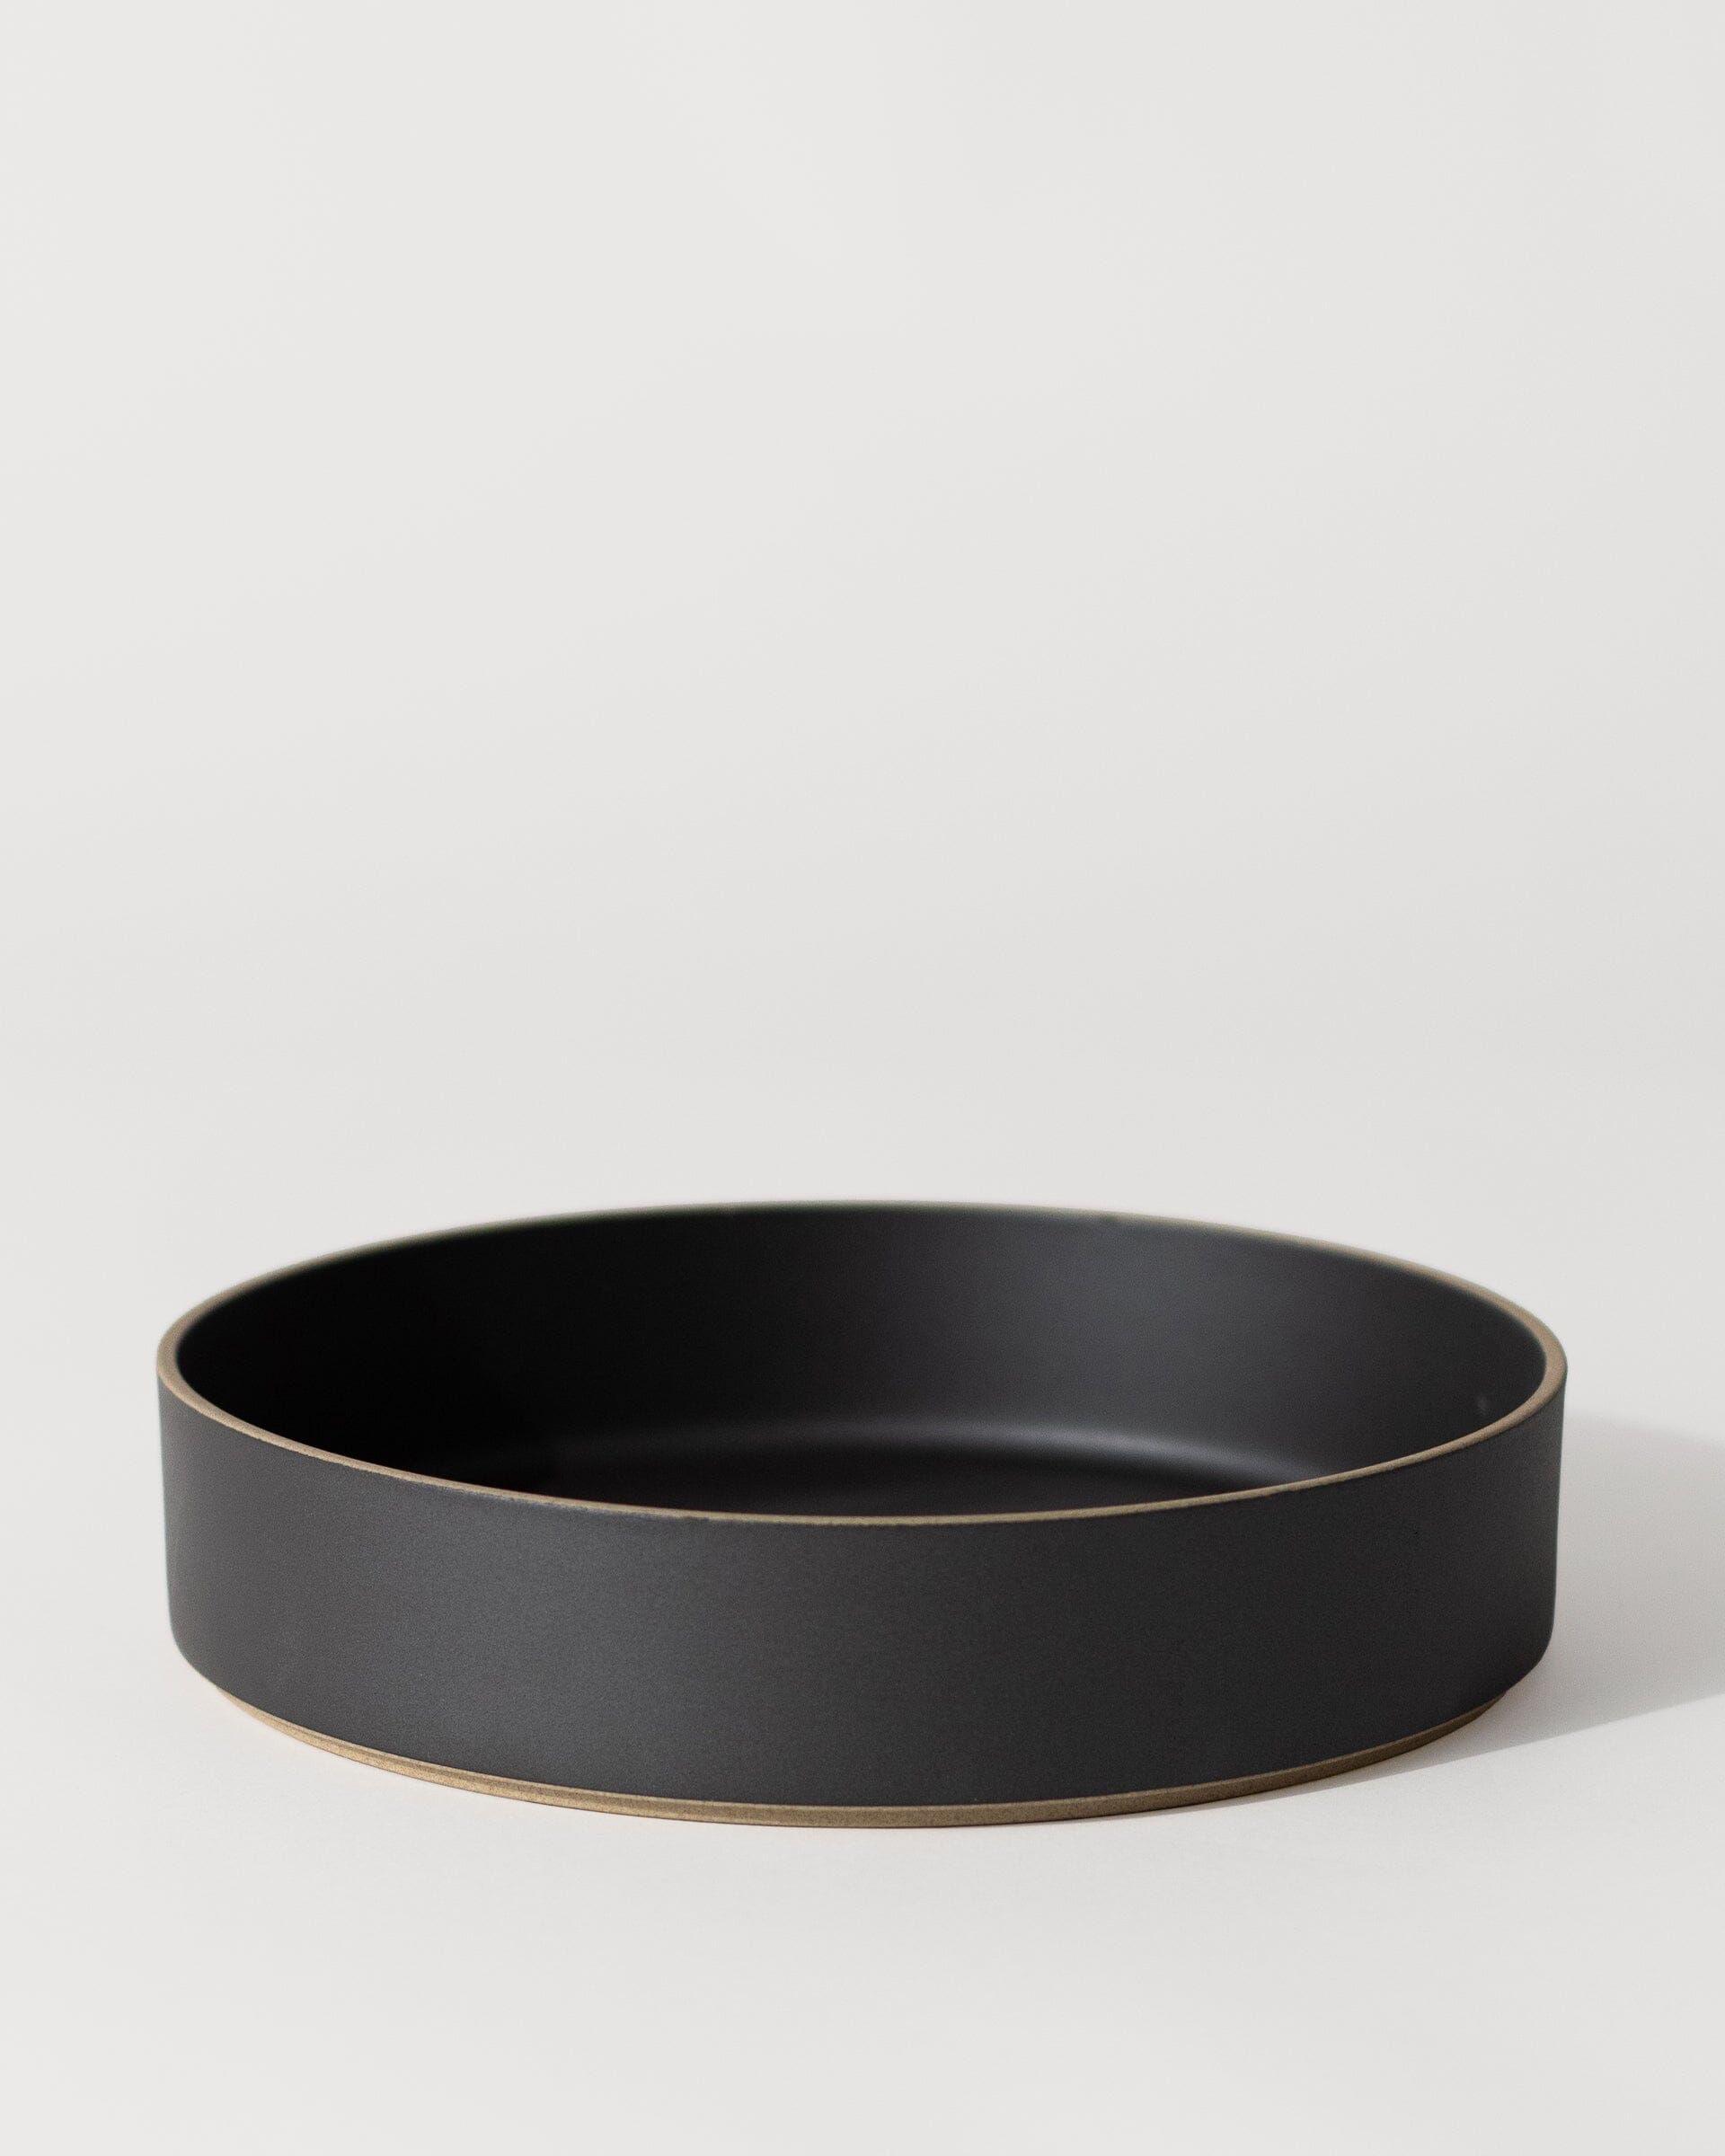 Hasami Porcelain Large Bowl in Black